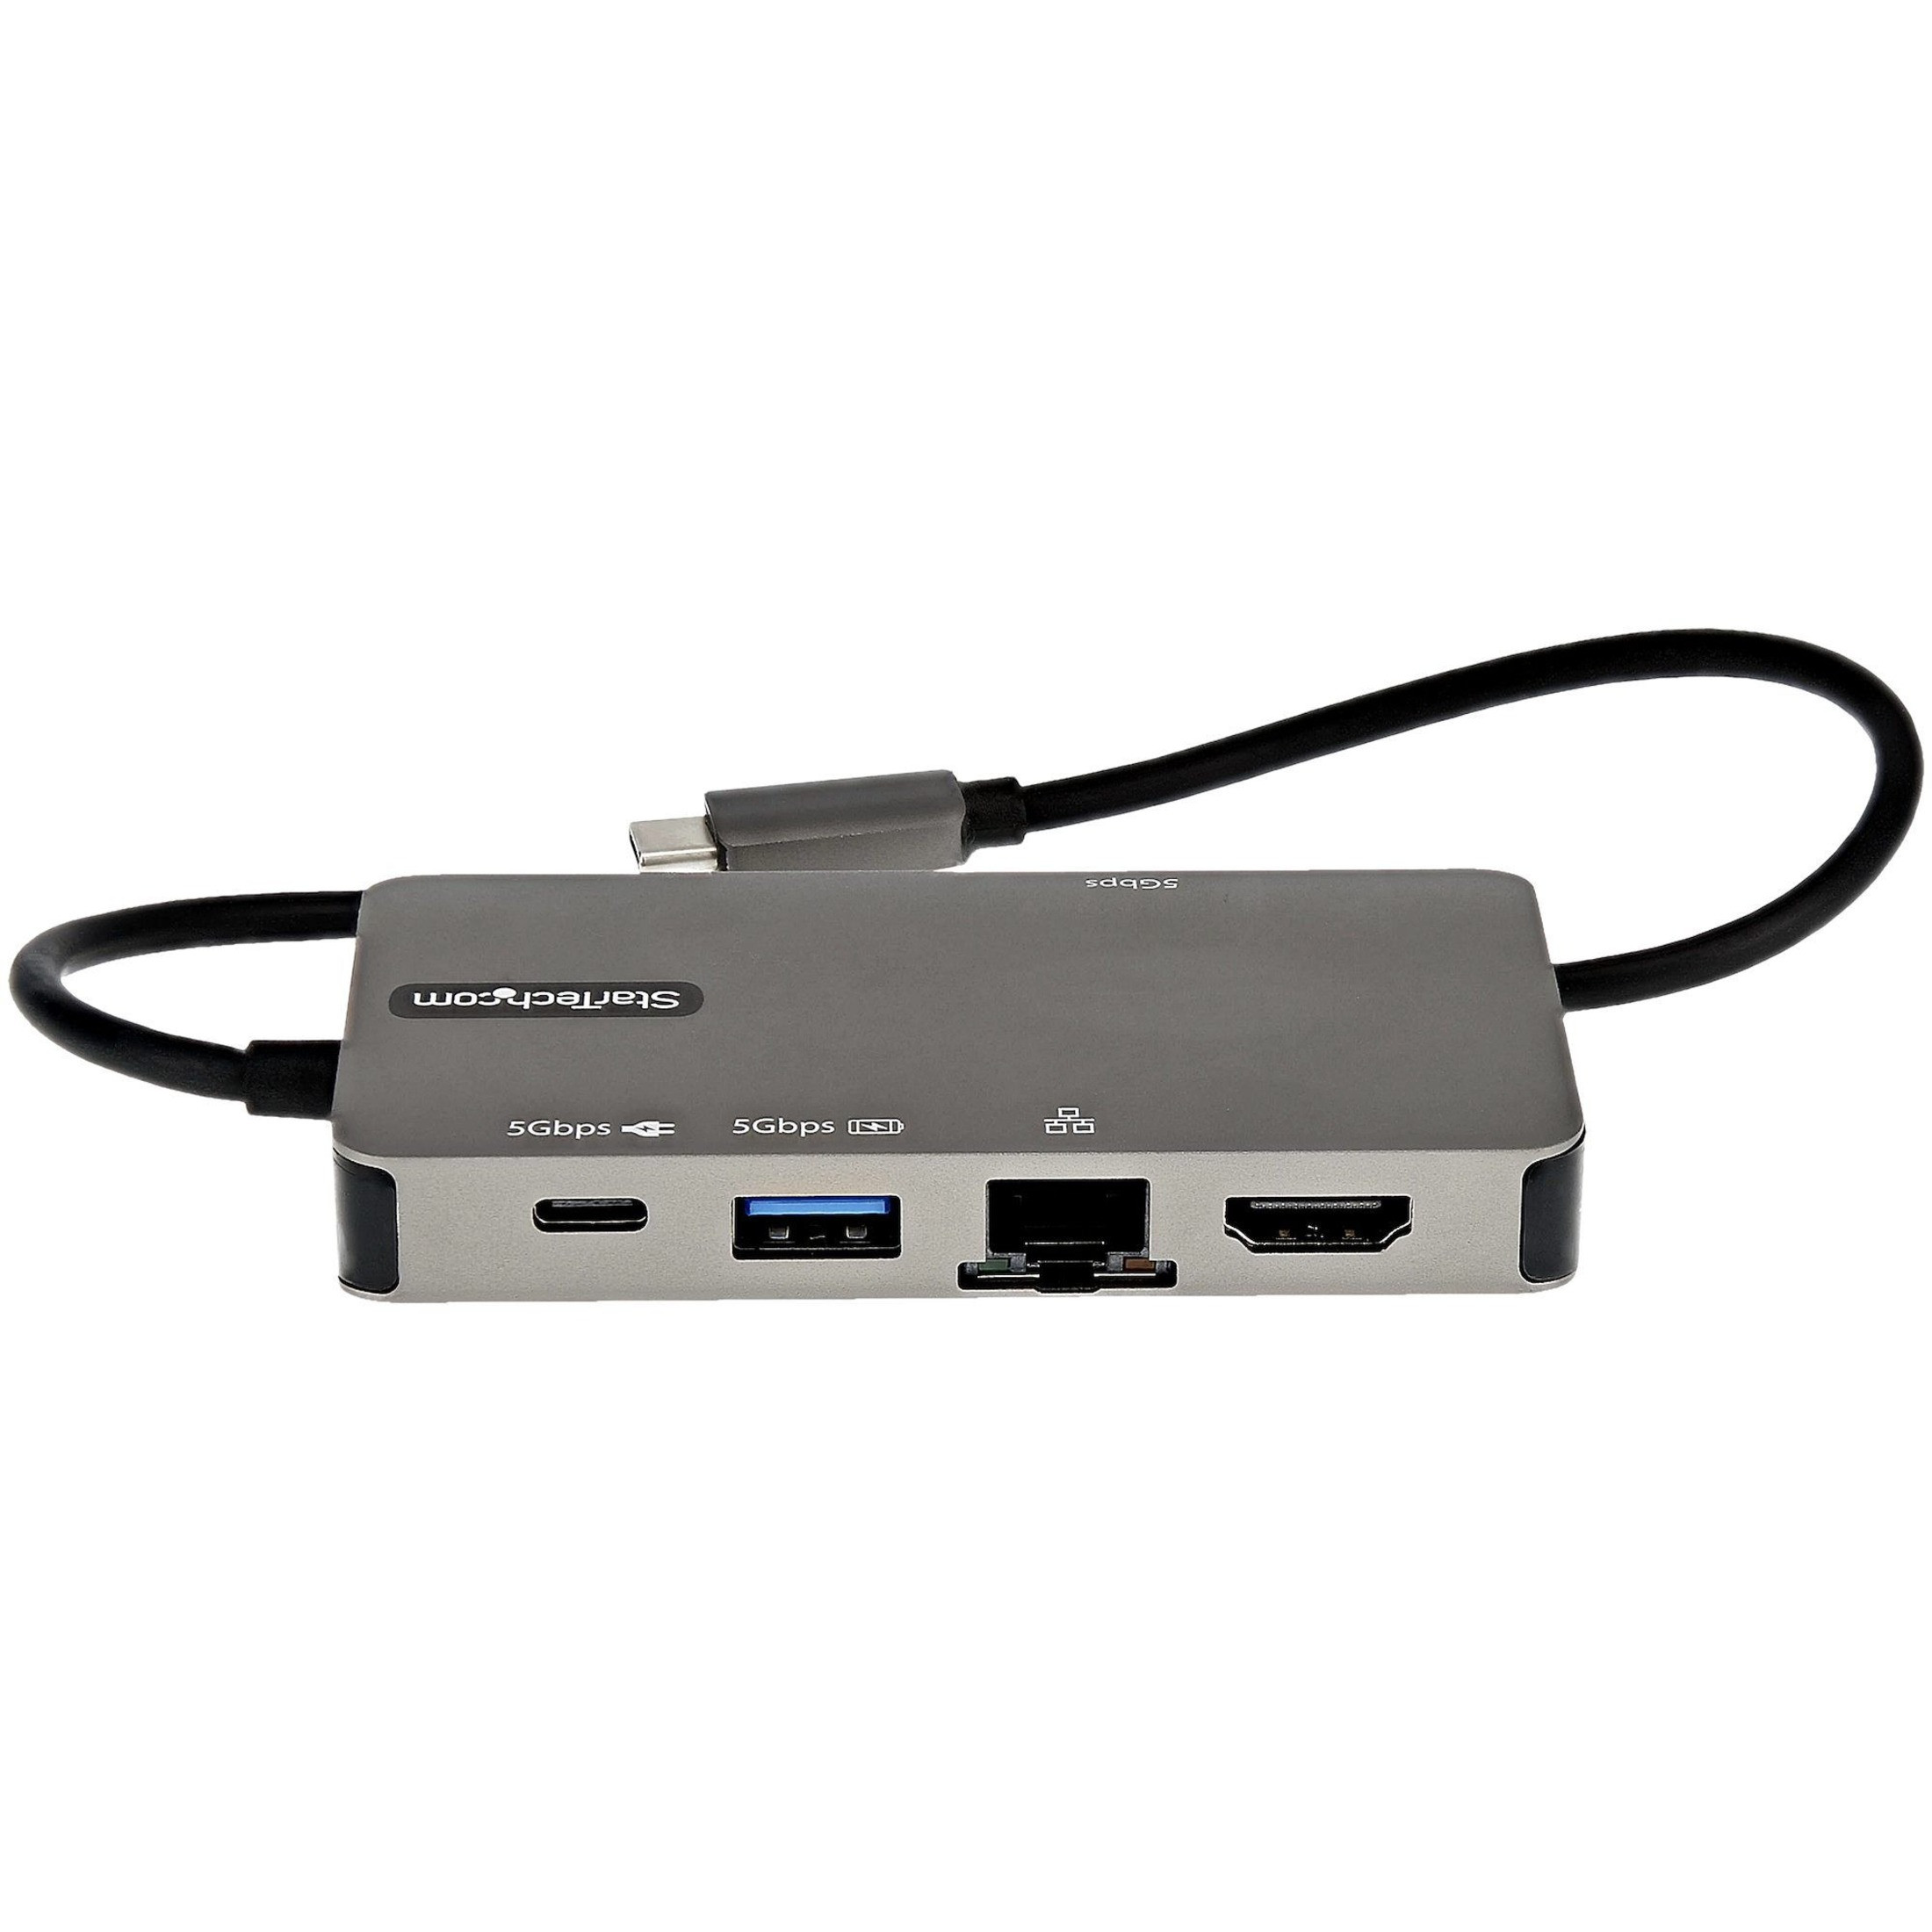 USB C Multiport Adapter with HDMI, VGA, Gigabit Ethernet & USB 3.0 - USB C  to 4K HDMI or 1080p VGA Display Mini Dock Hub - USB Type-C Travel Docking